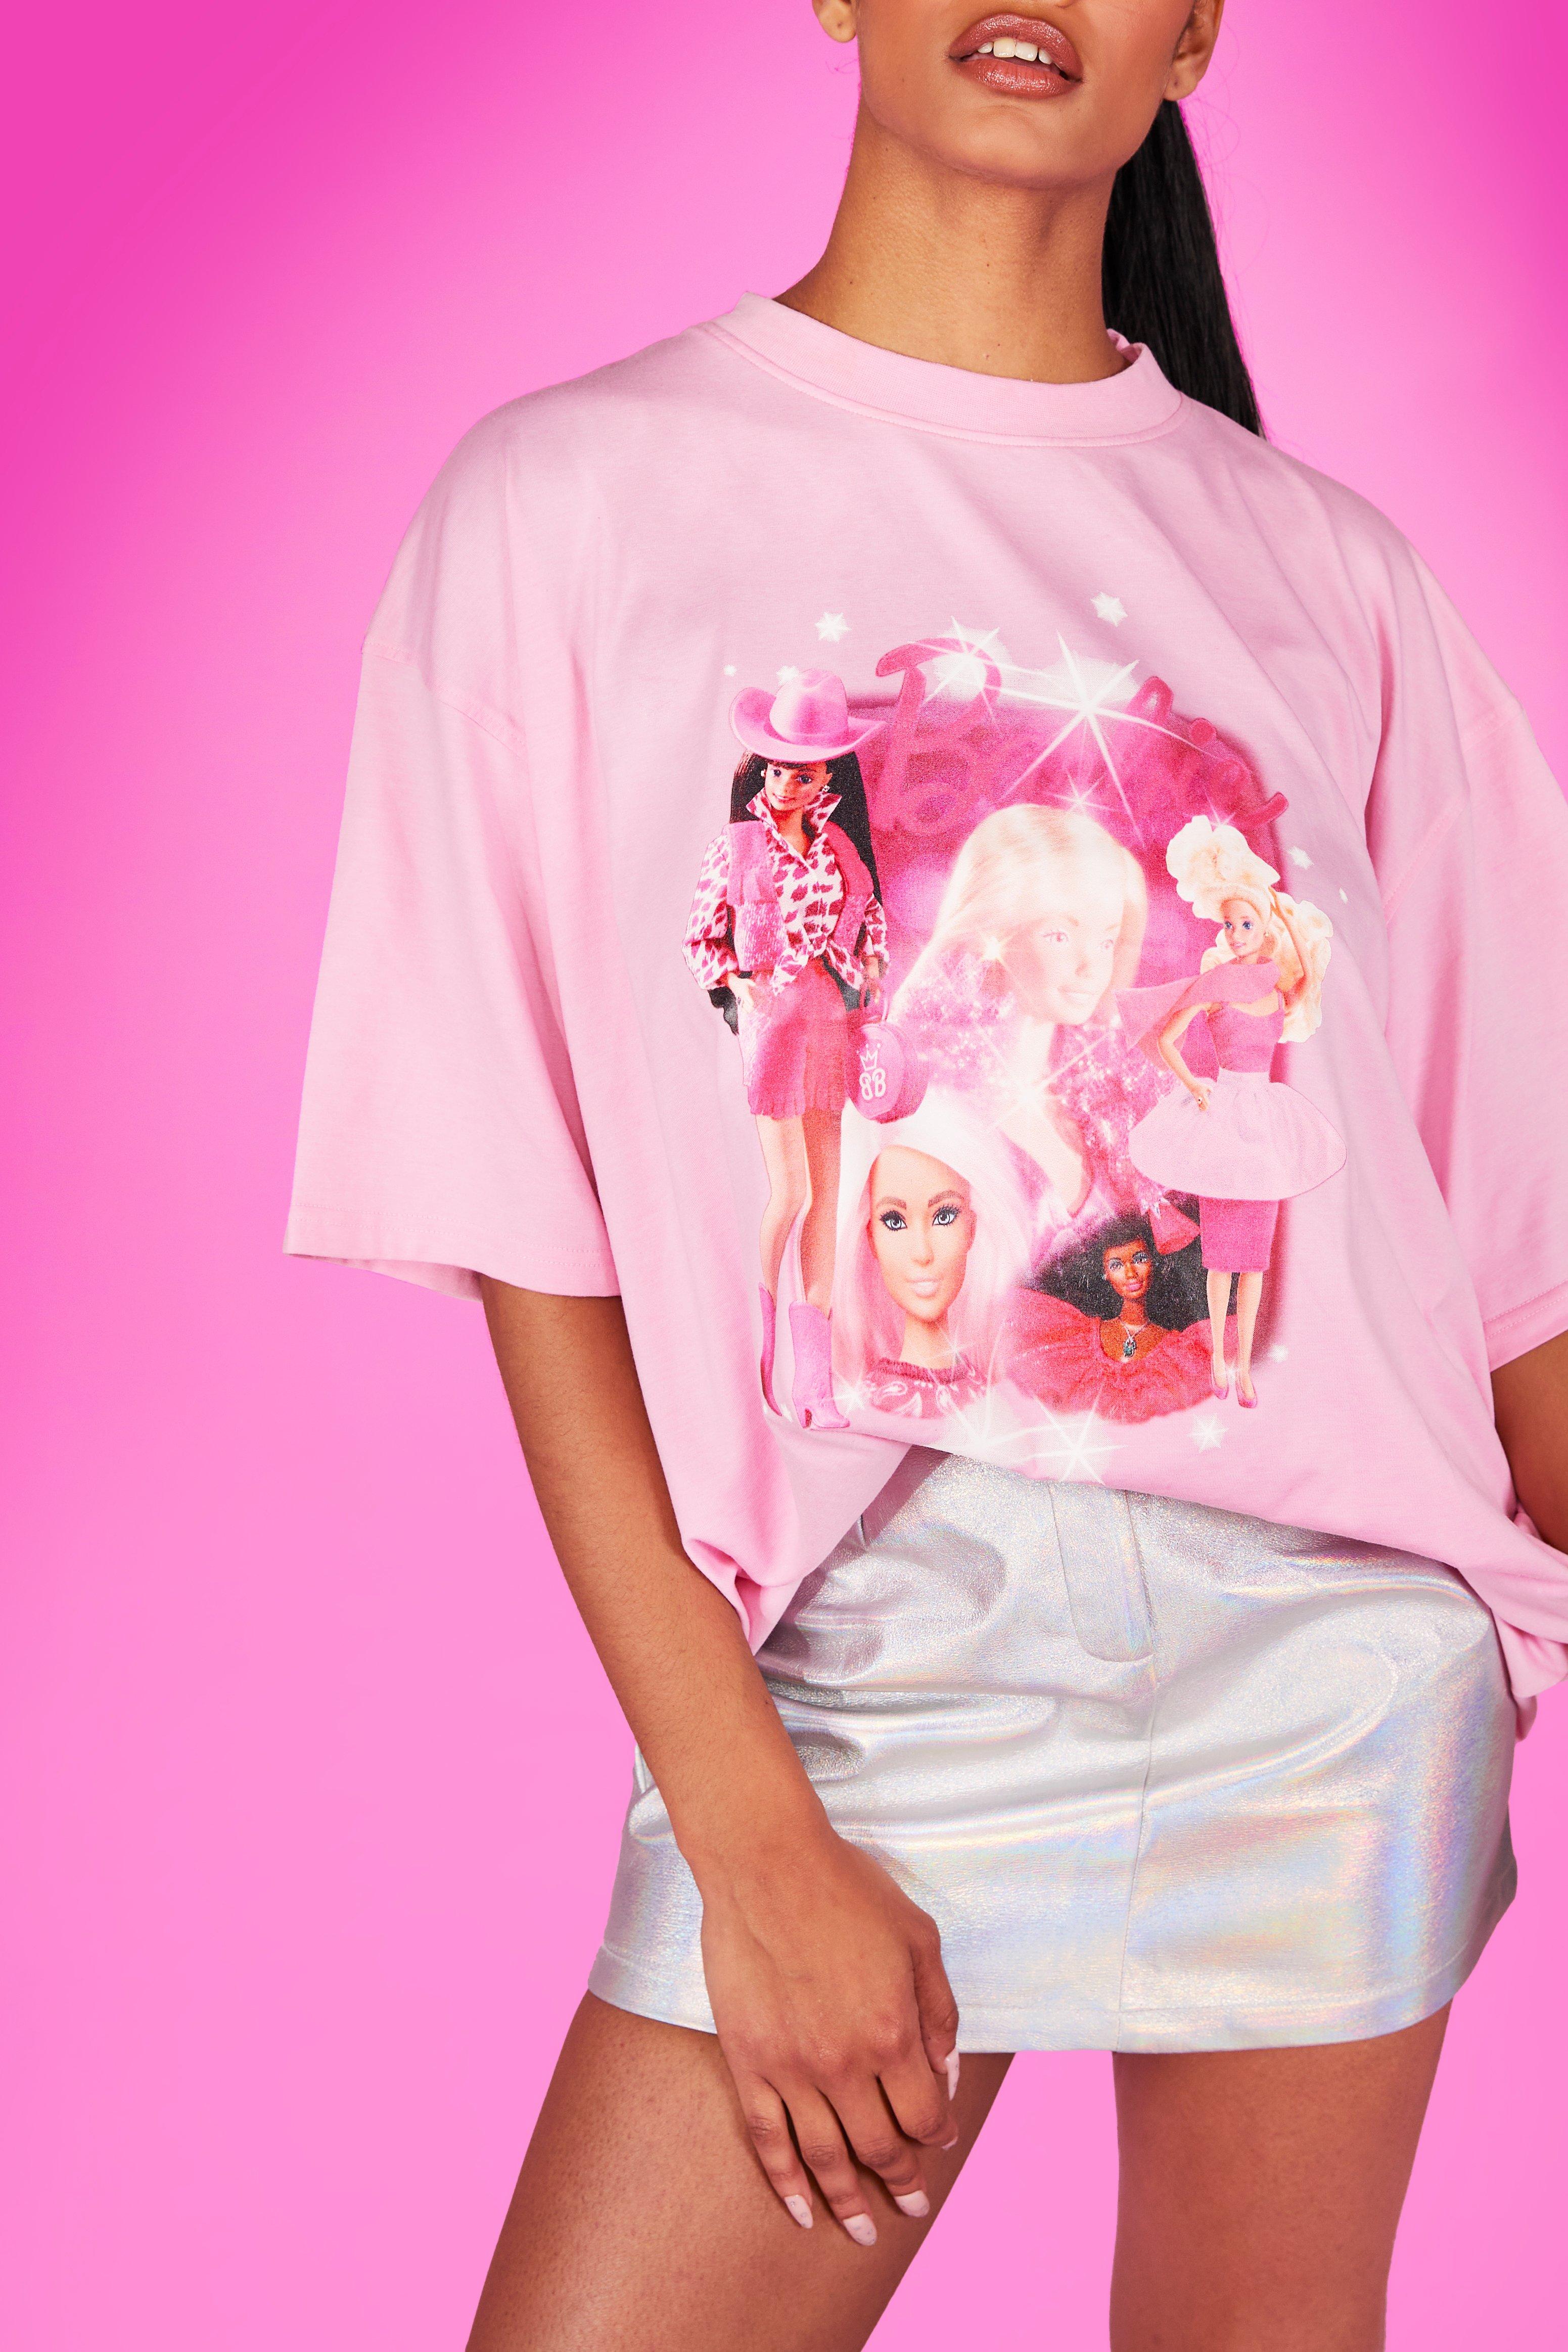 T-shirt Feminina Over Barbie Pink Doll Petit Rosè Caramelo